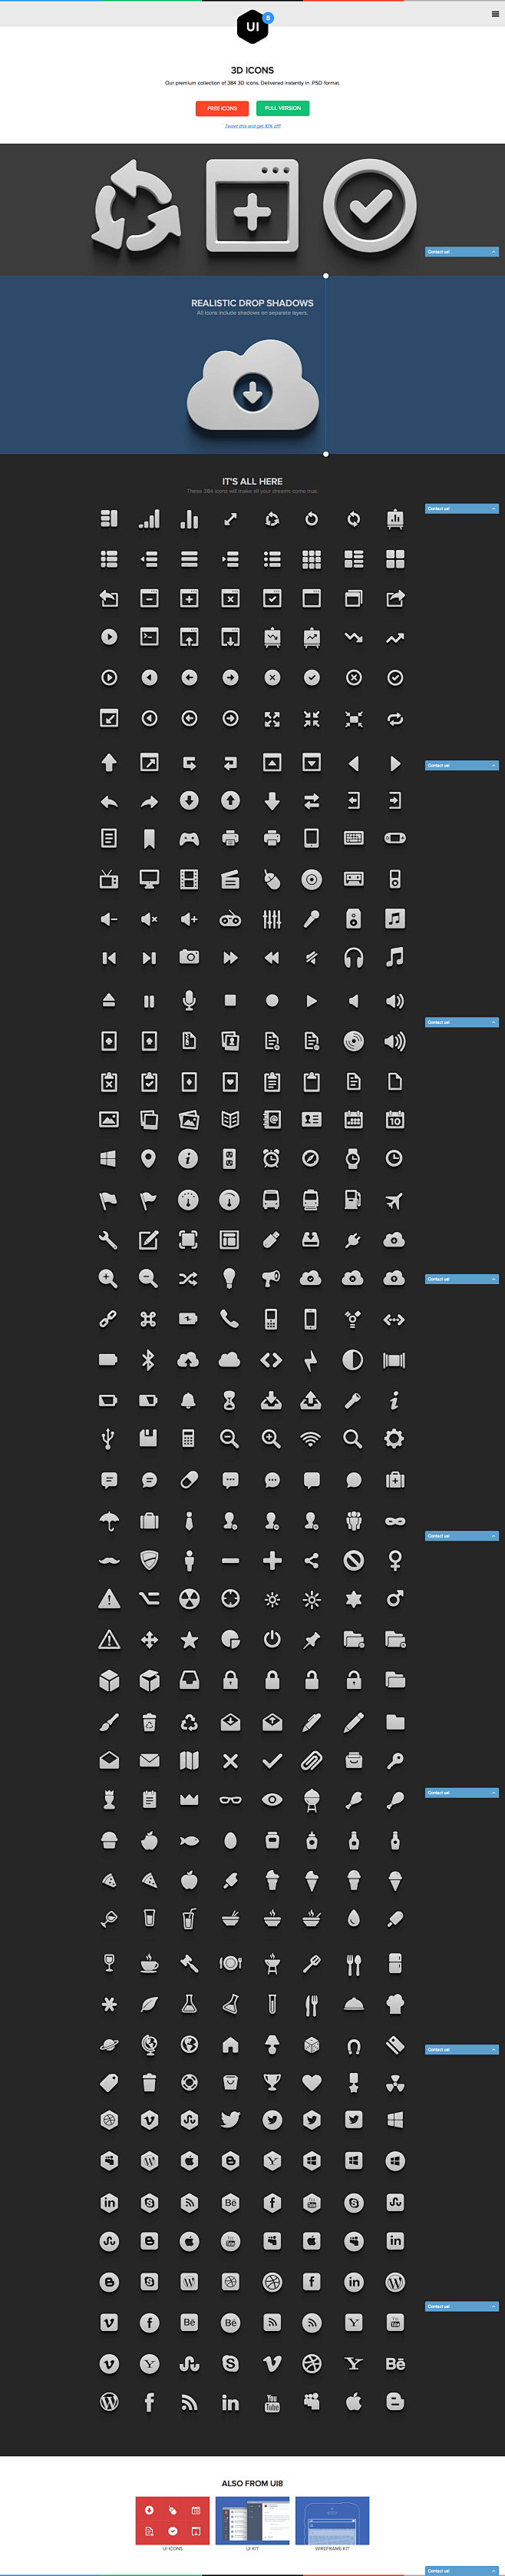 UI8 | 3D Icons